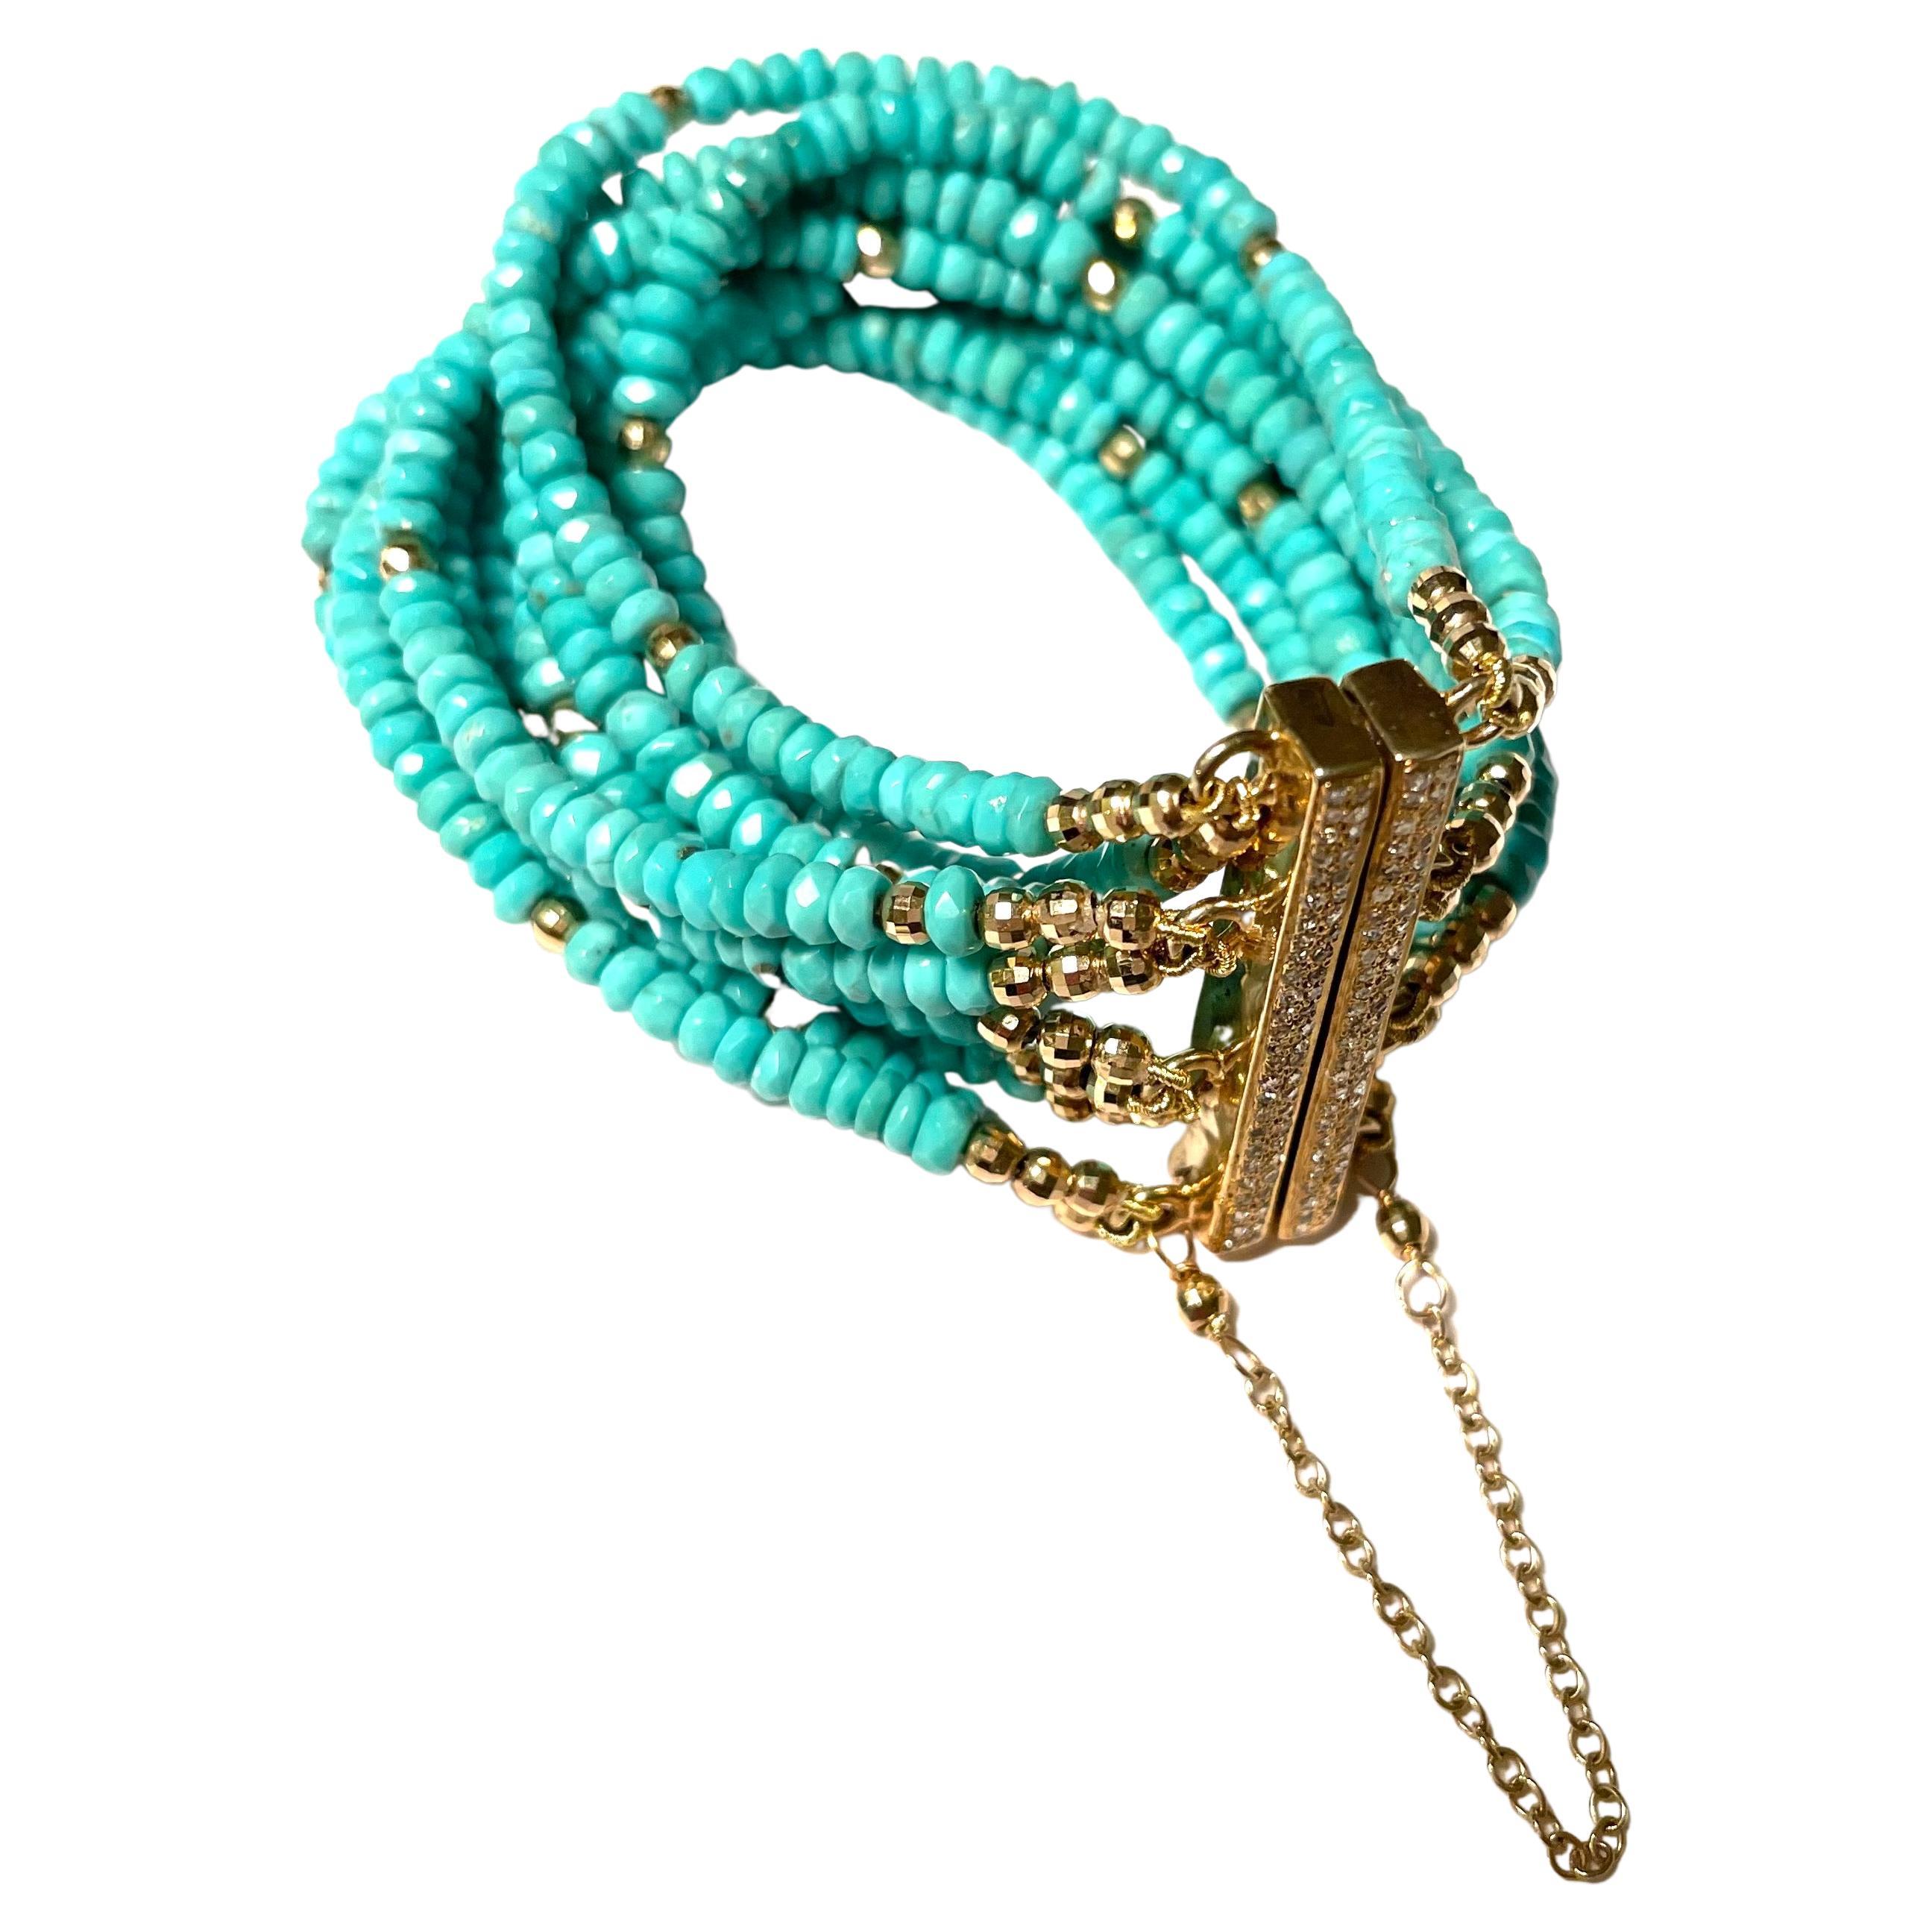 Sleeping Beauty Turquoise with 14k Gold Balls Bracelet